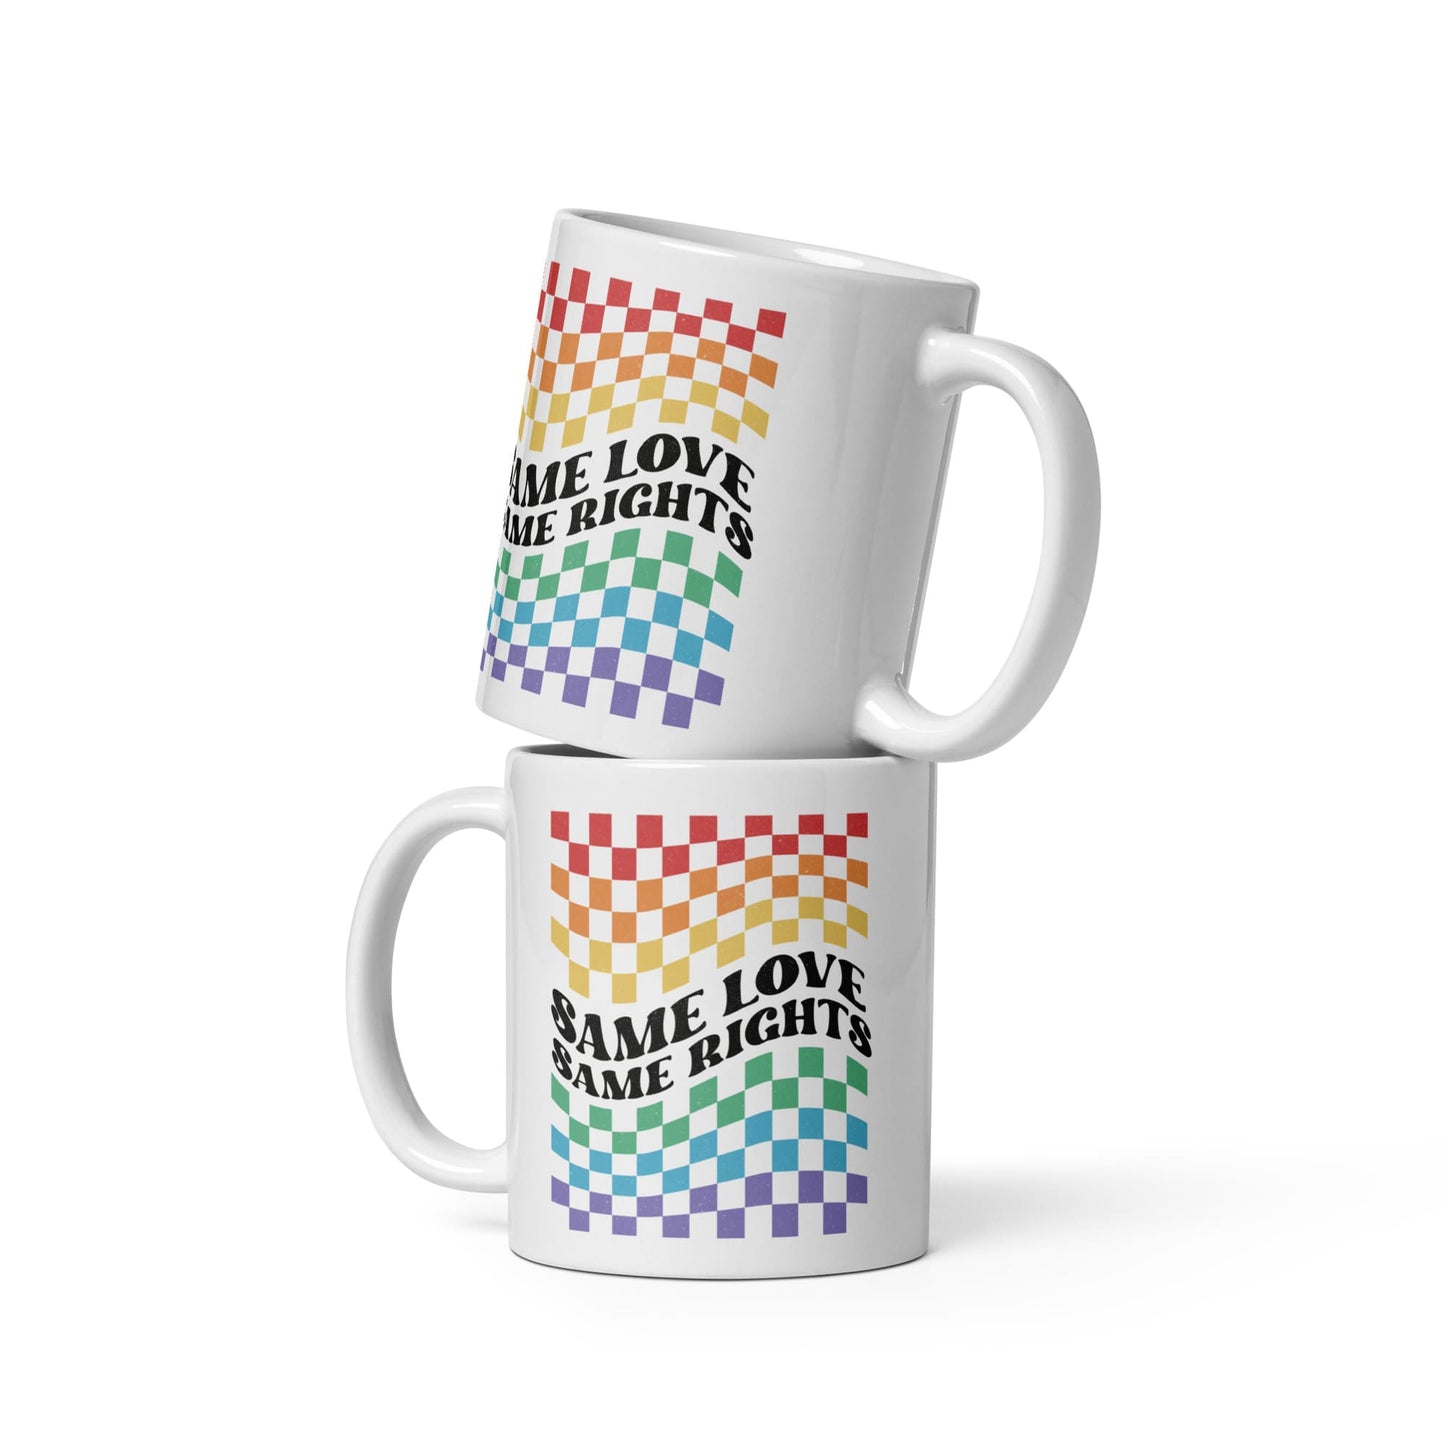 LGBTQ mug, same love same rights pride coffee or tea cup both sides